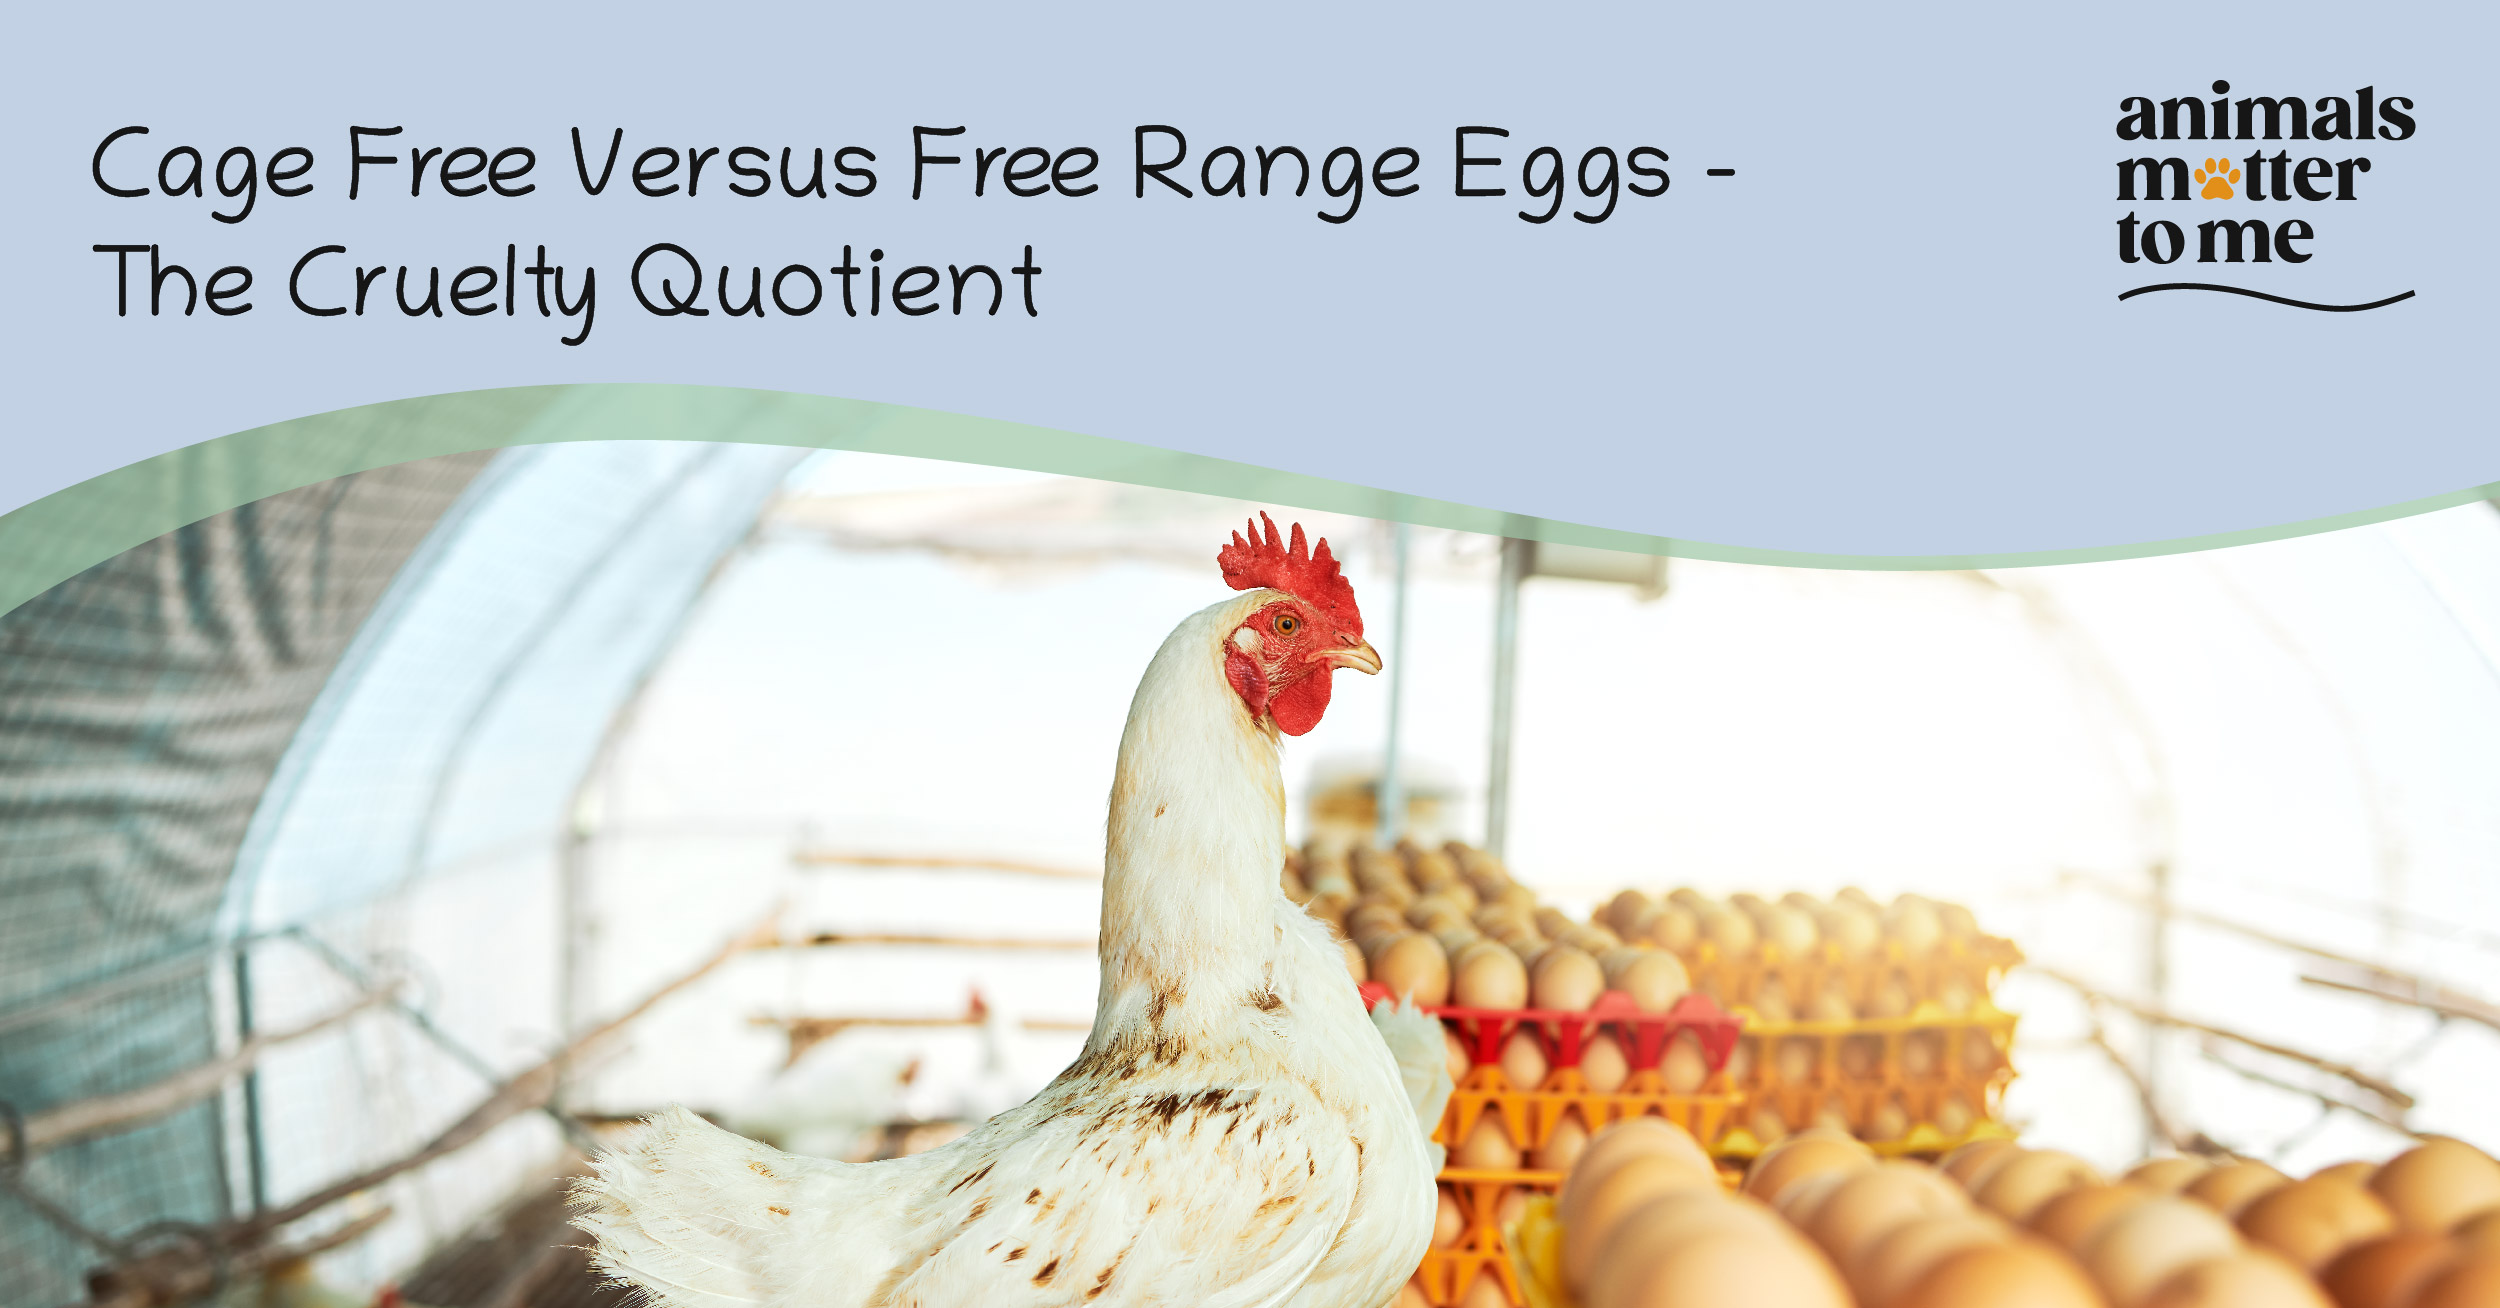 Cage free vs free range eggs - The cruelty quotient - Blog Cover